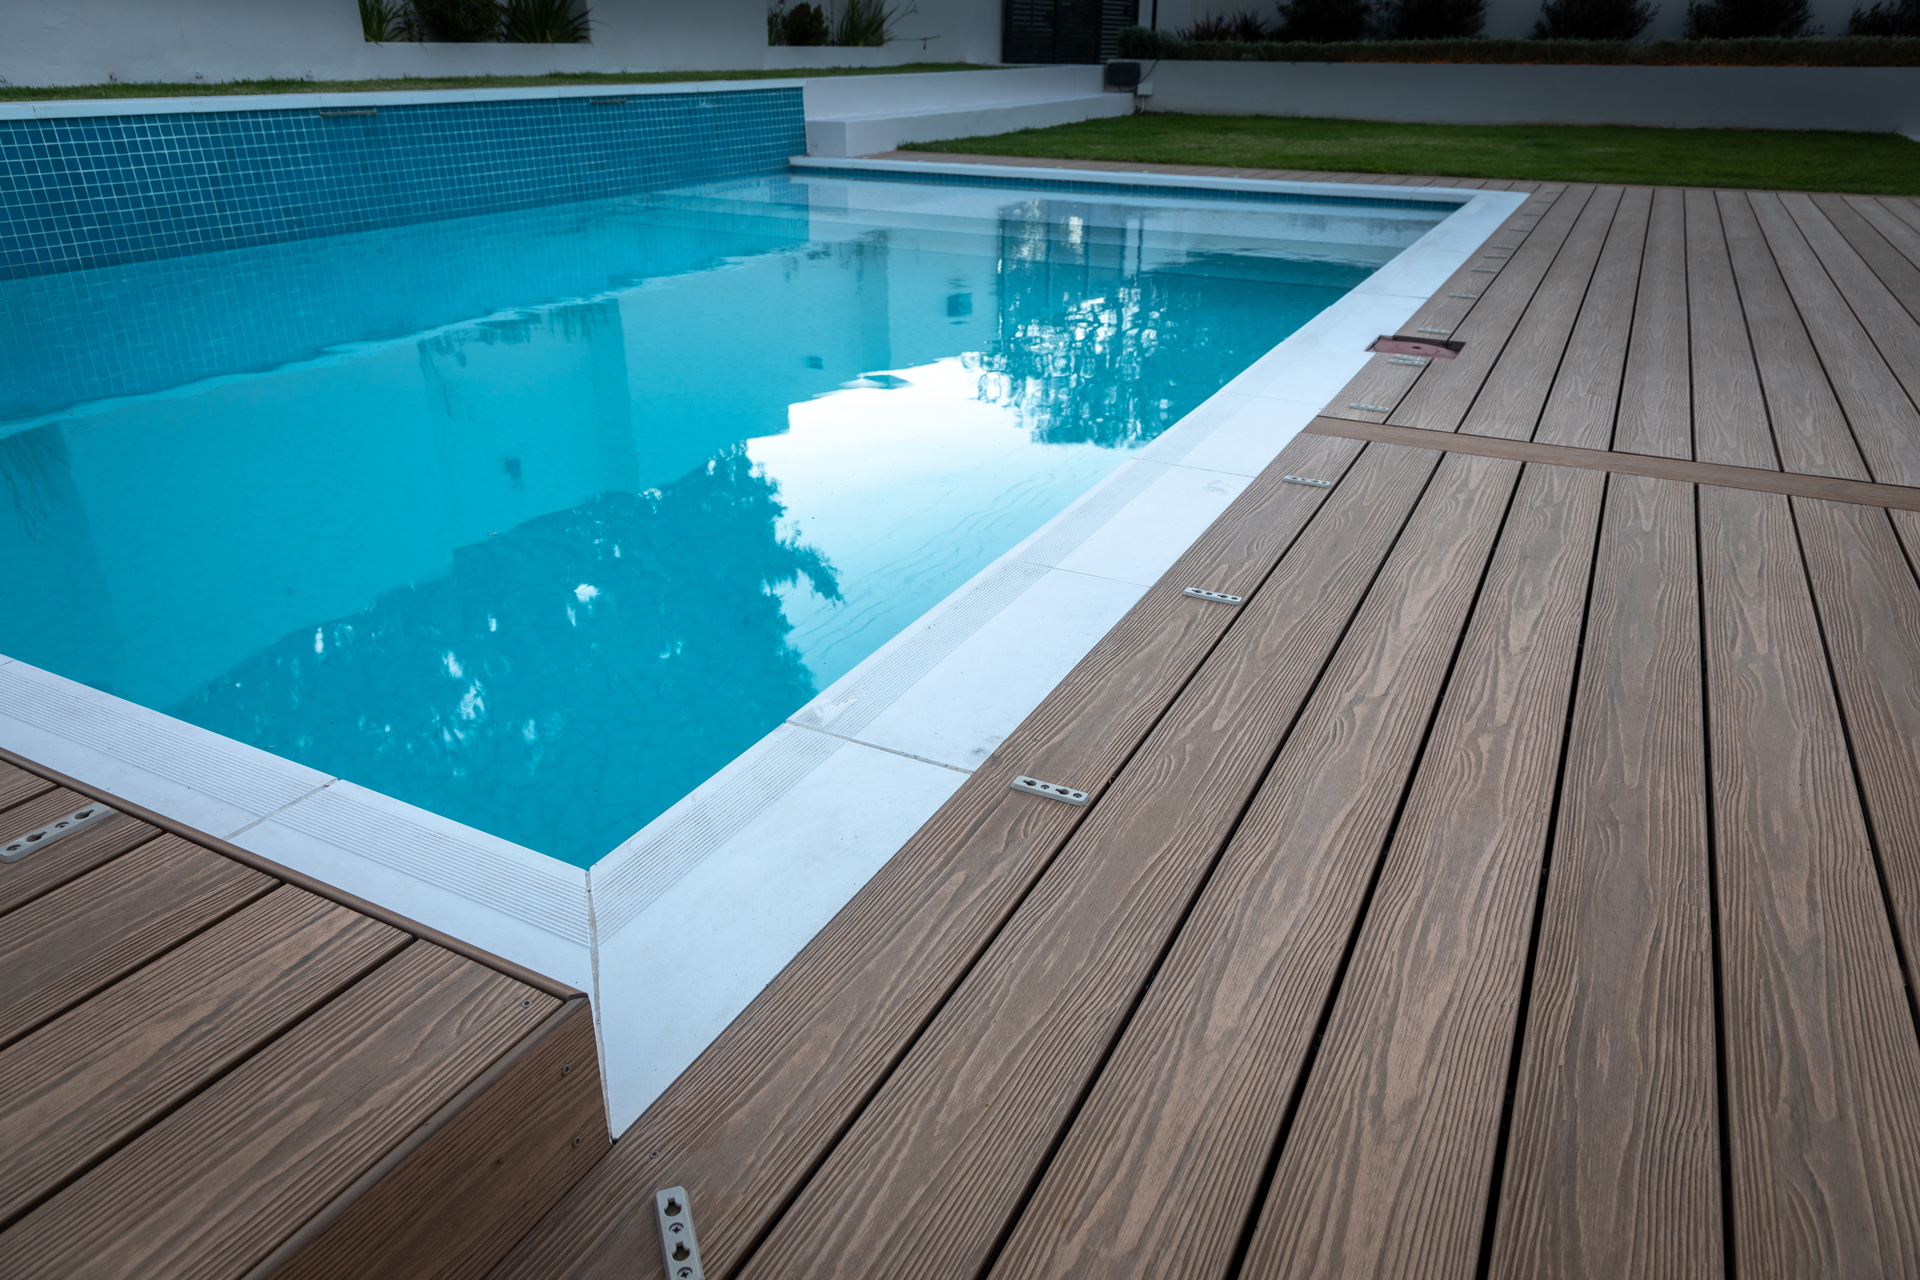 composite decking boards installed poolside 